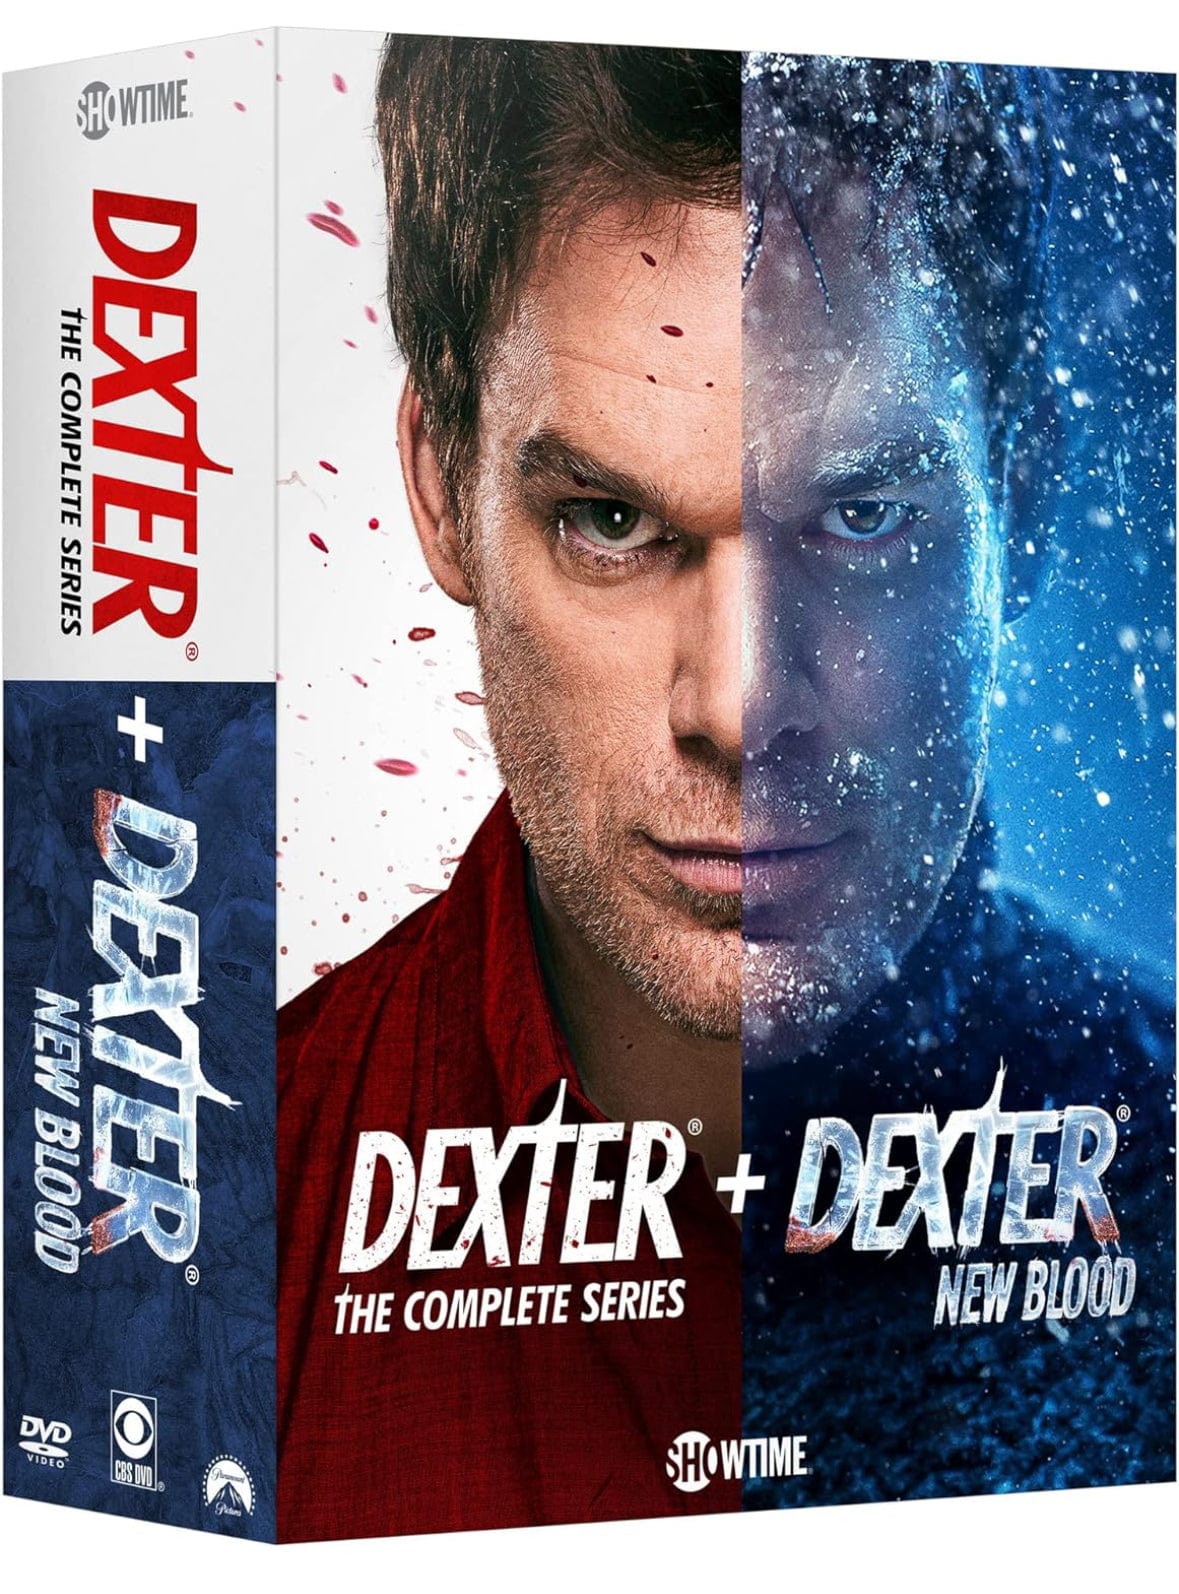 Dexter DVD Complete Series Box Set plus New Blood! – Blaze DVDs